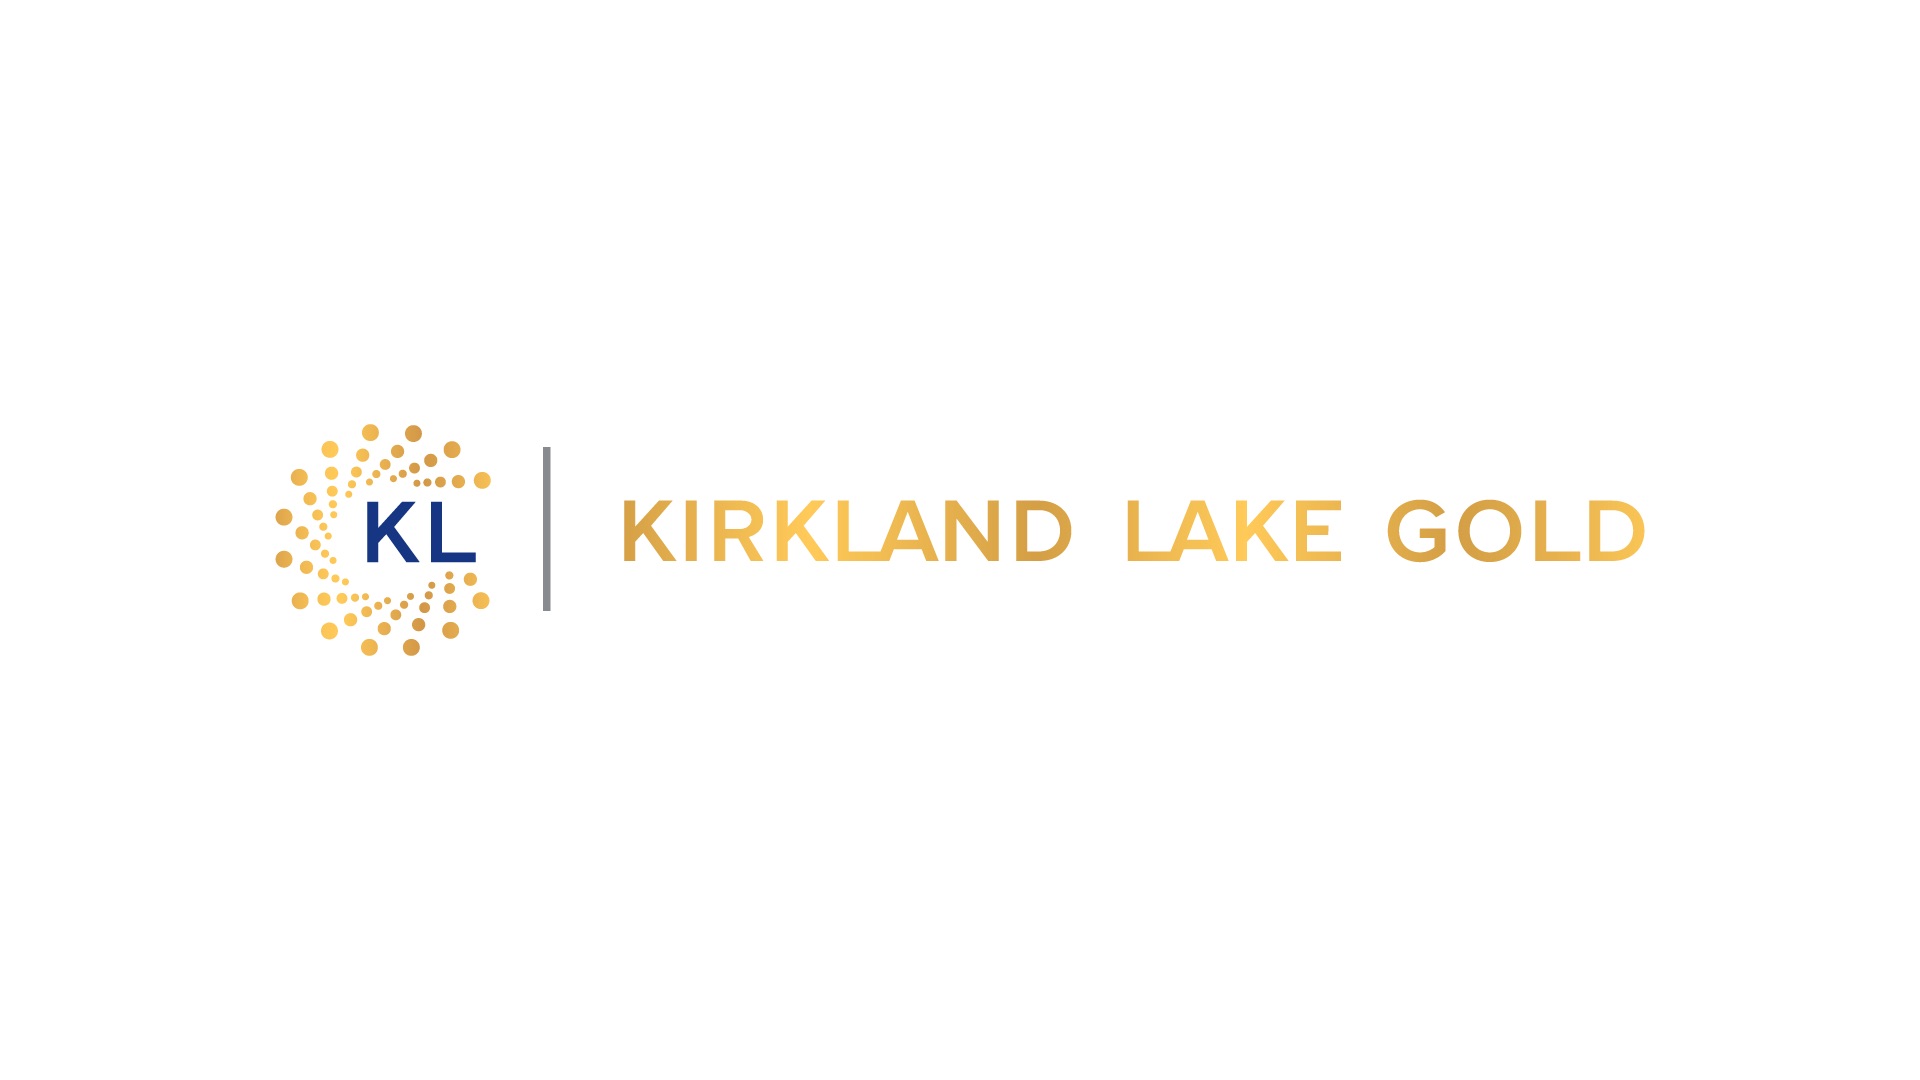 Kirkland Lake Gold Stock Chart